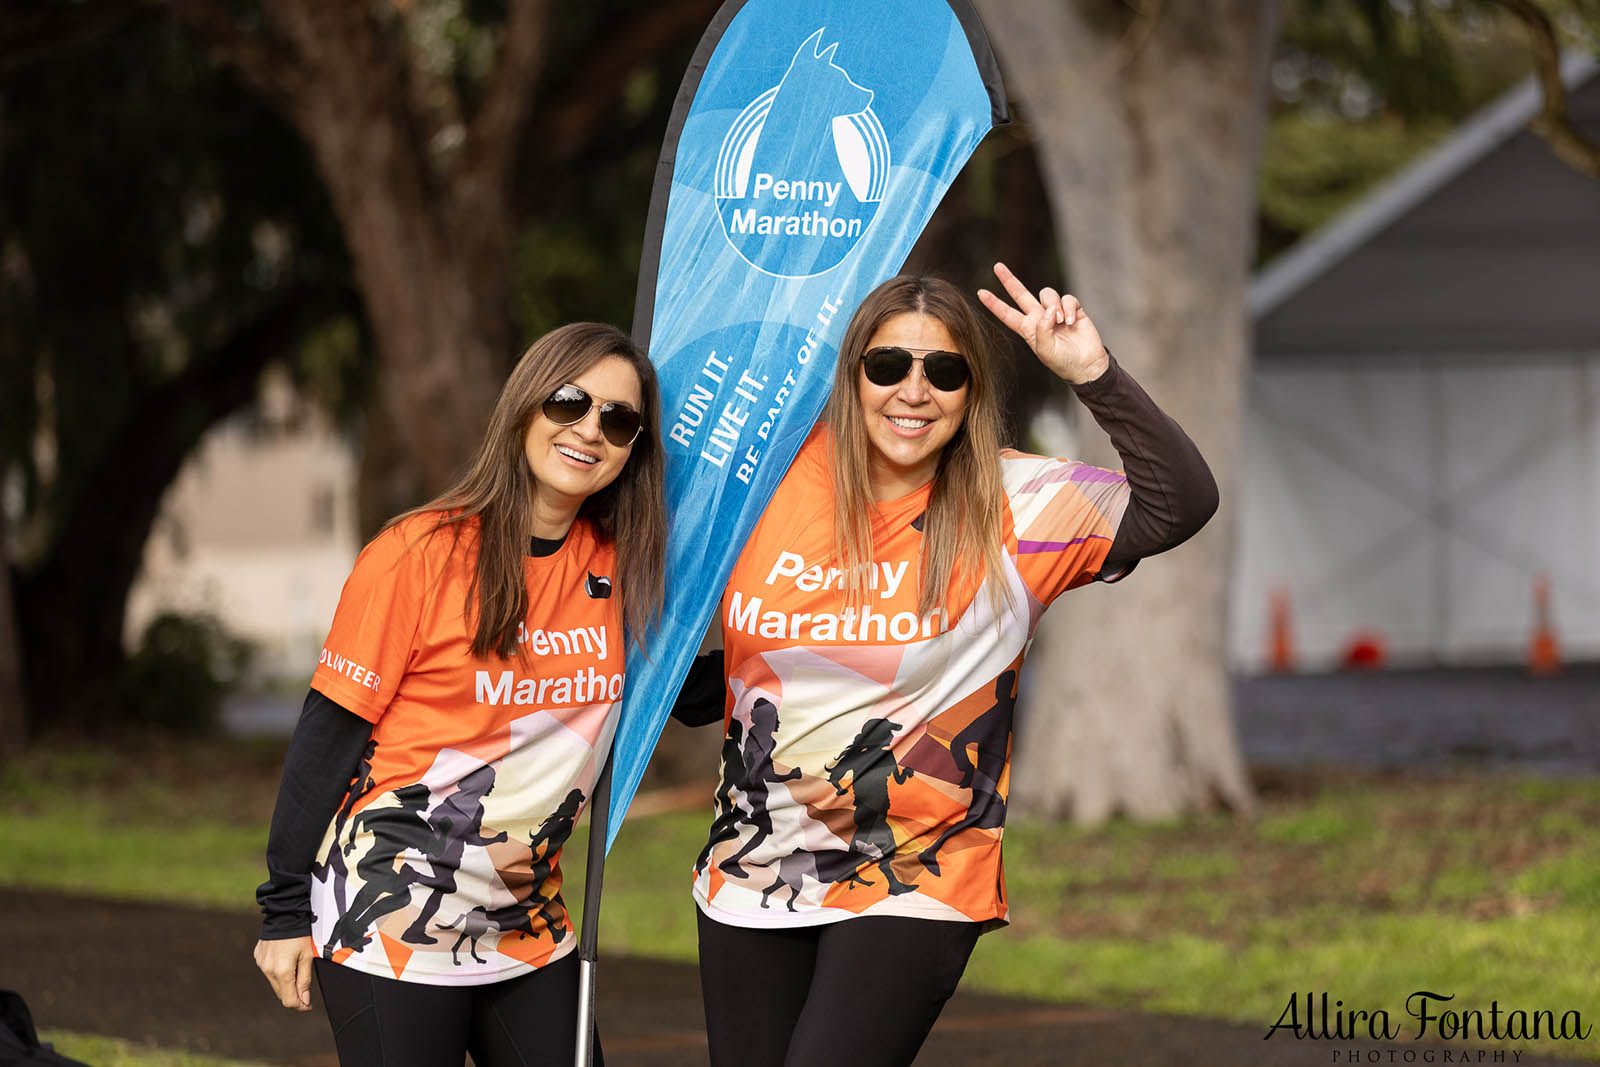 The Sydney Penny Marathon 2022 